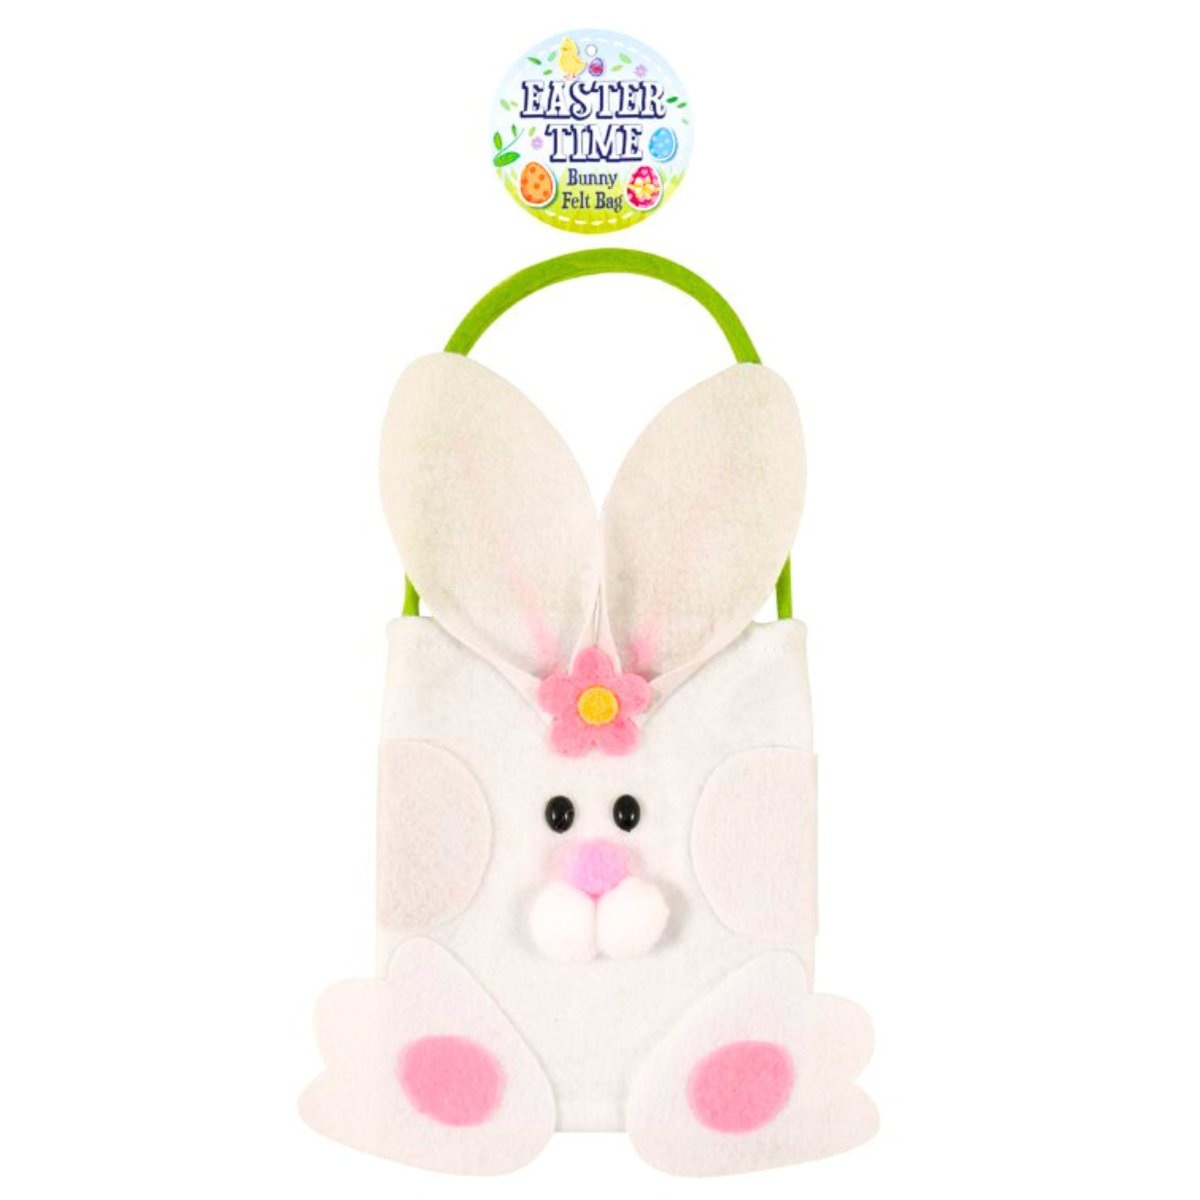 Felt Easter Bunny Bag - Kids Party Craft